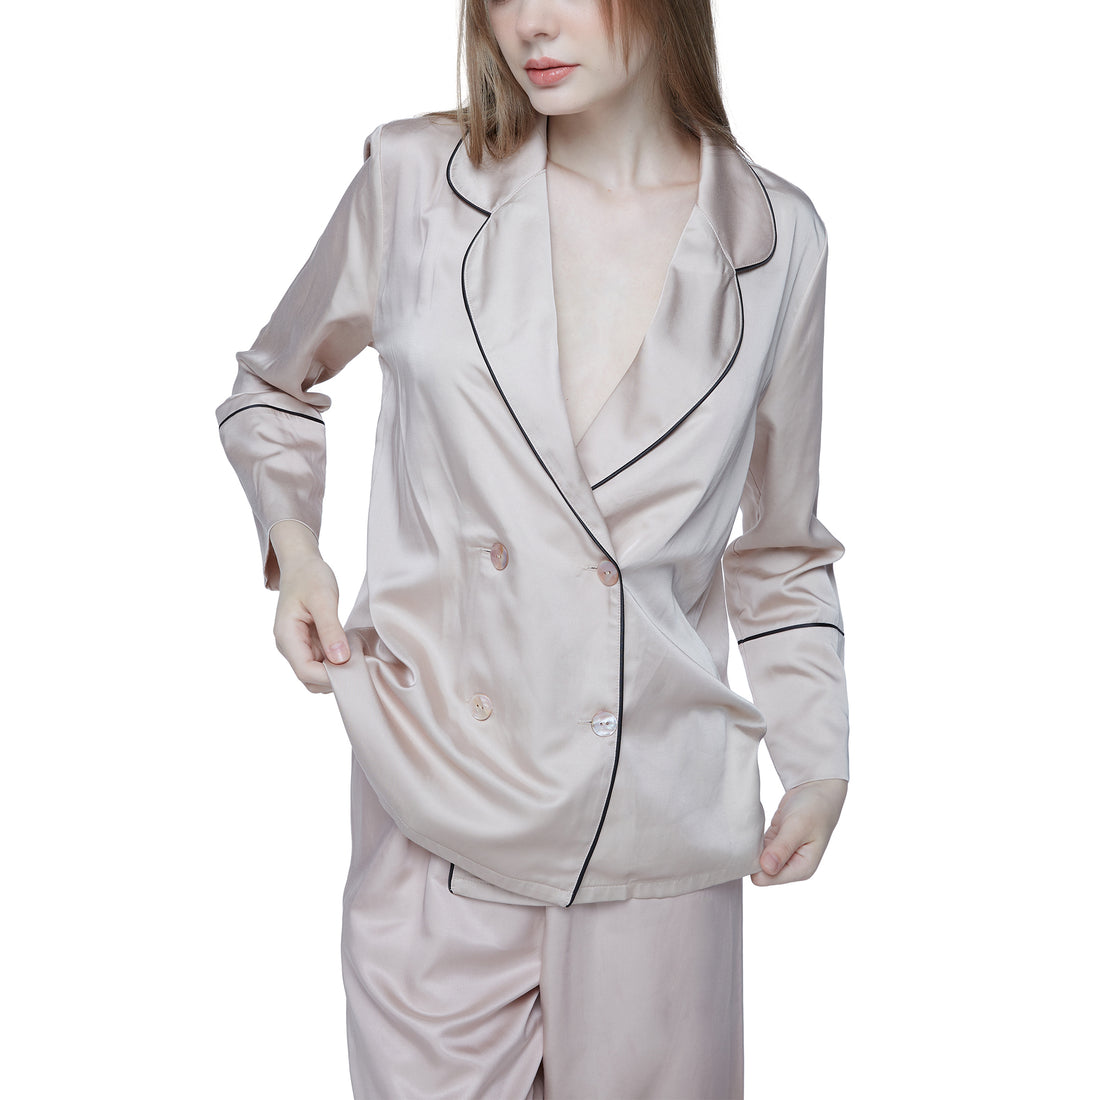 Wacoal Sleepwear, pajamas, cute print, model WN9E02, pink color (PI)